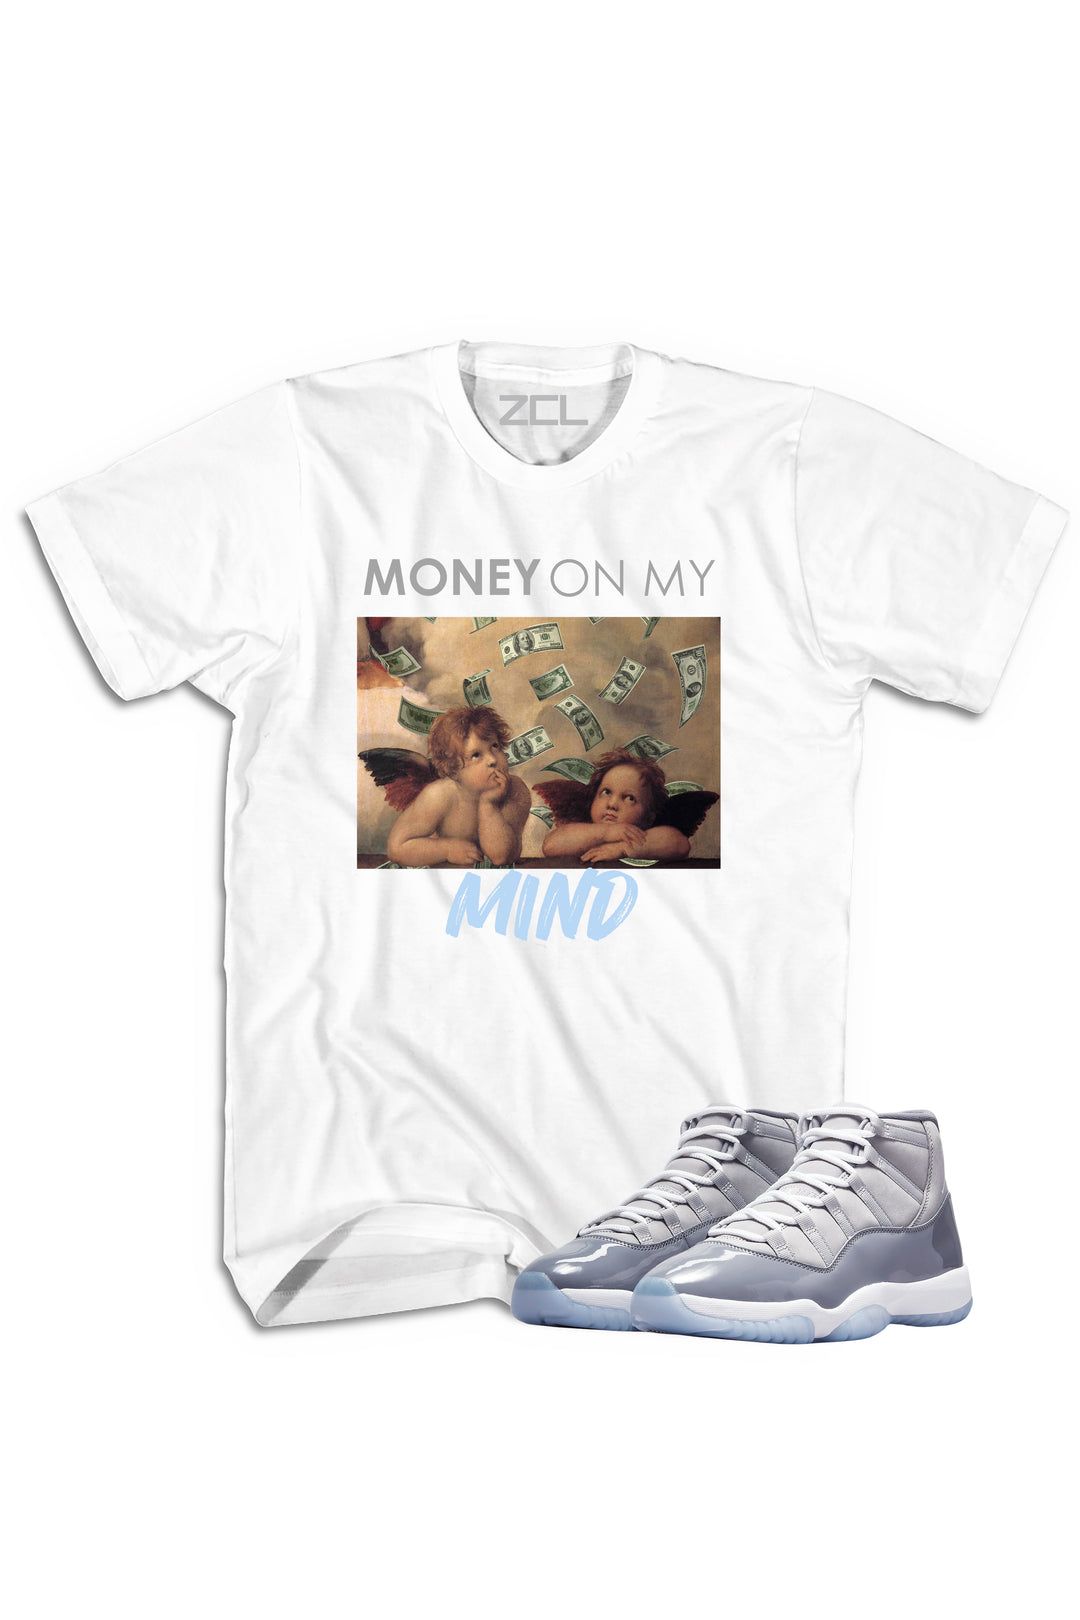 Air Jordan 11 "Money On My Mind" Tee Cool Grey - Zamage